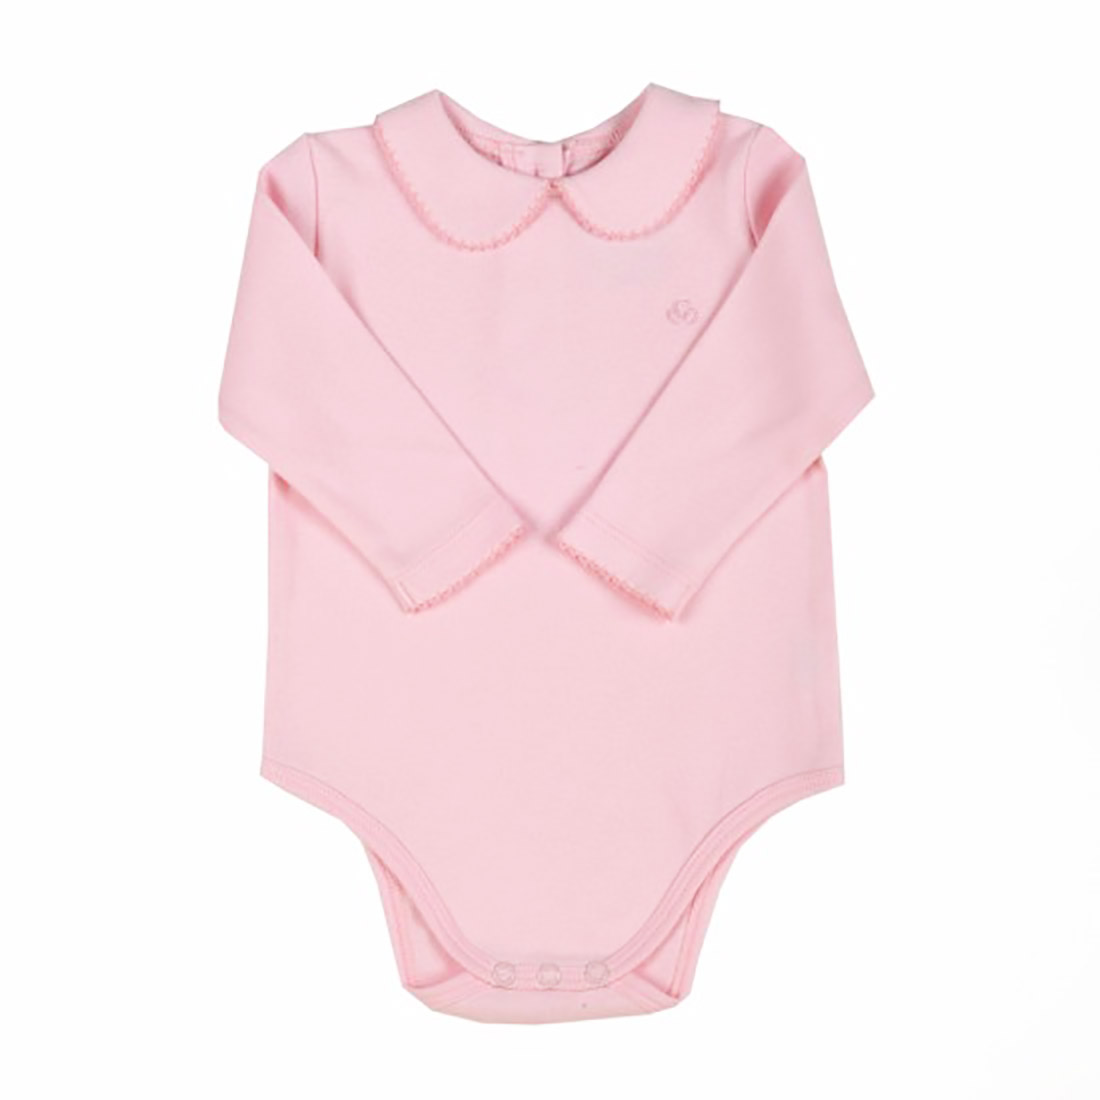 OrganicEra Organic Baby Bodysuit, Baby Collar